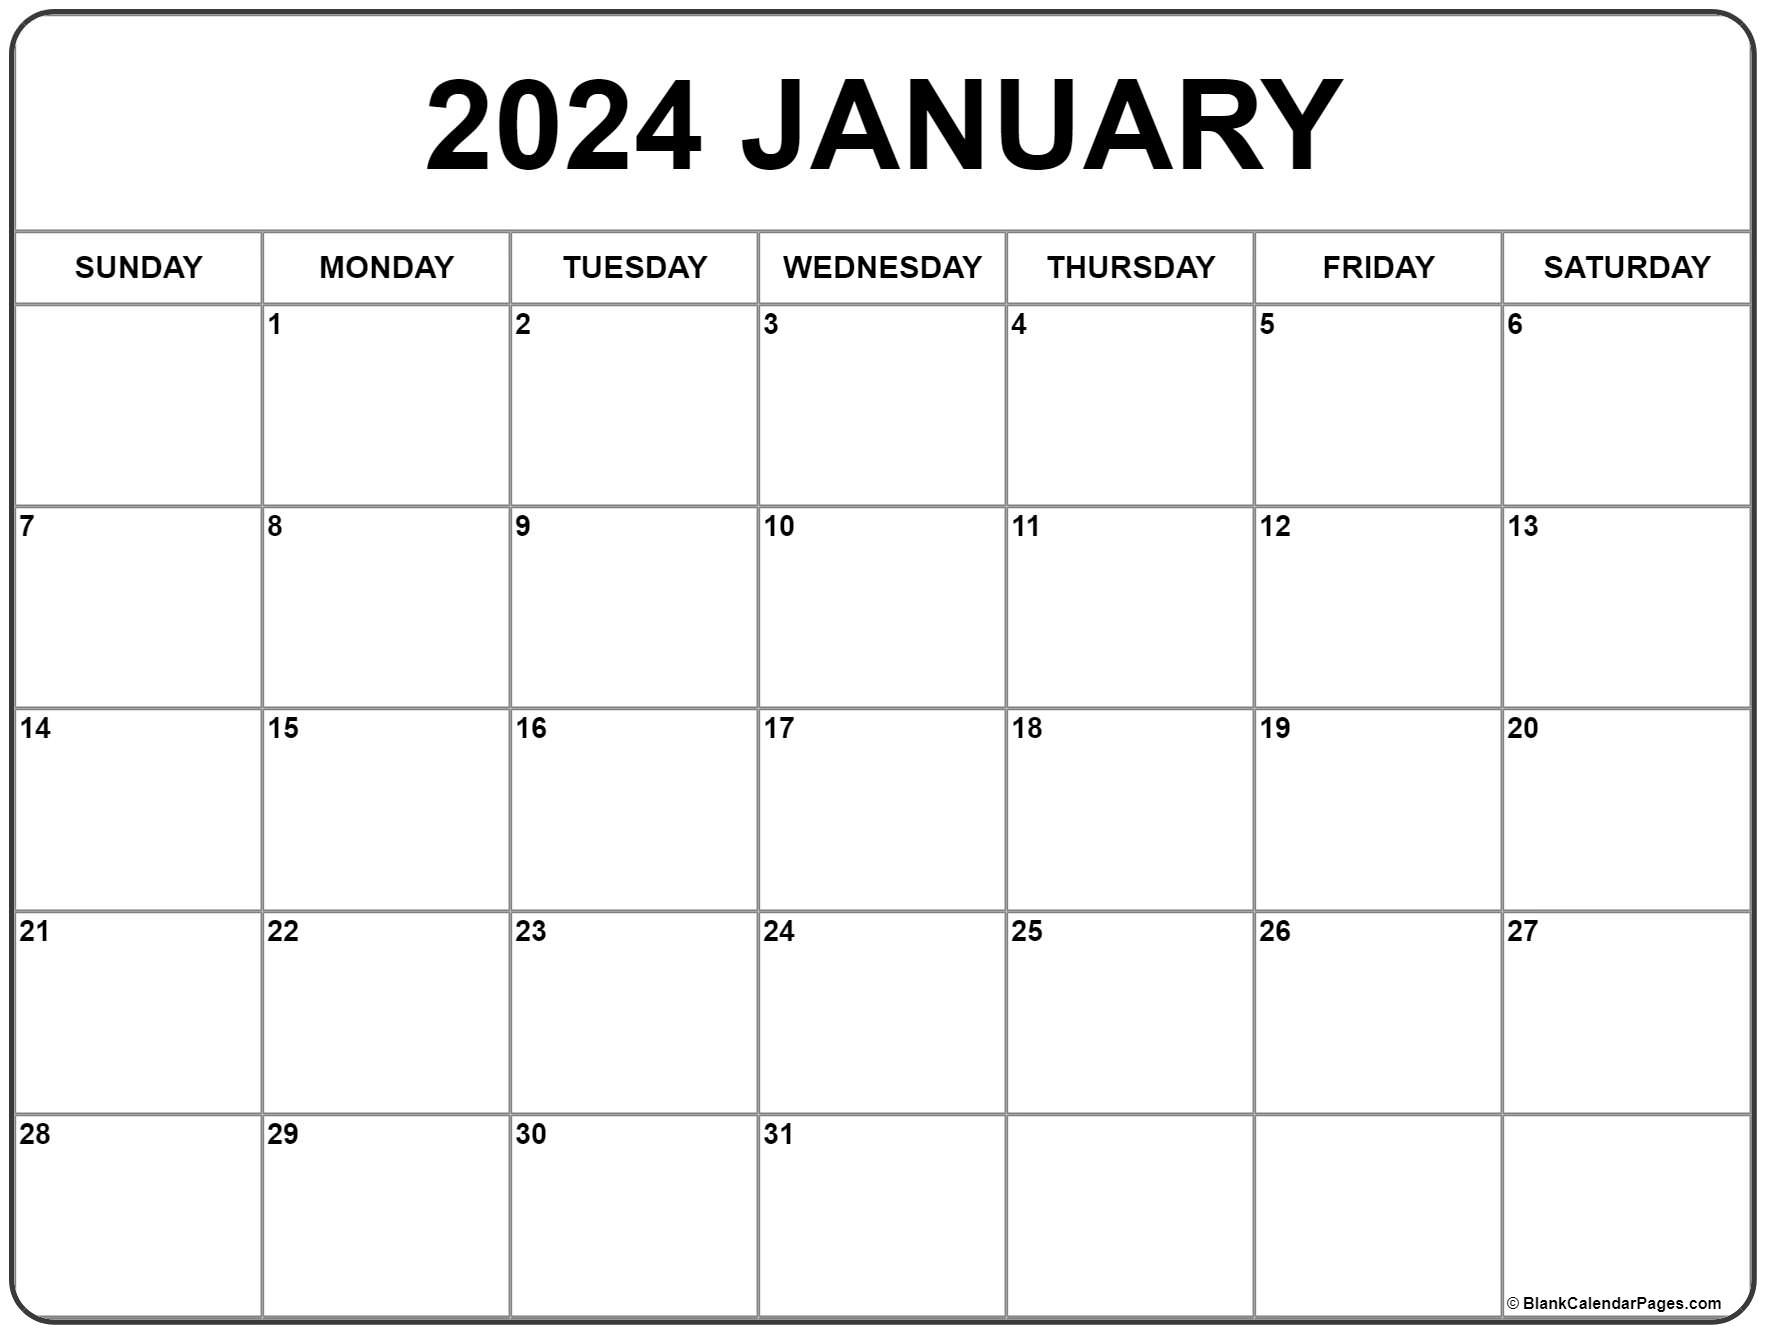 January 2024 Calendar | Free Printable Calendar for Free Printable 2024 Calendar January